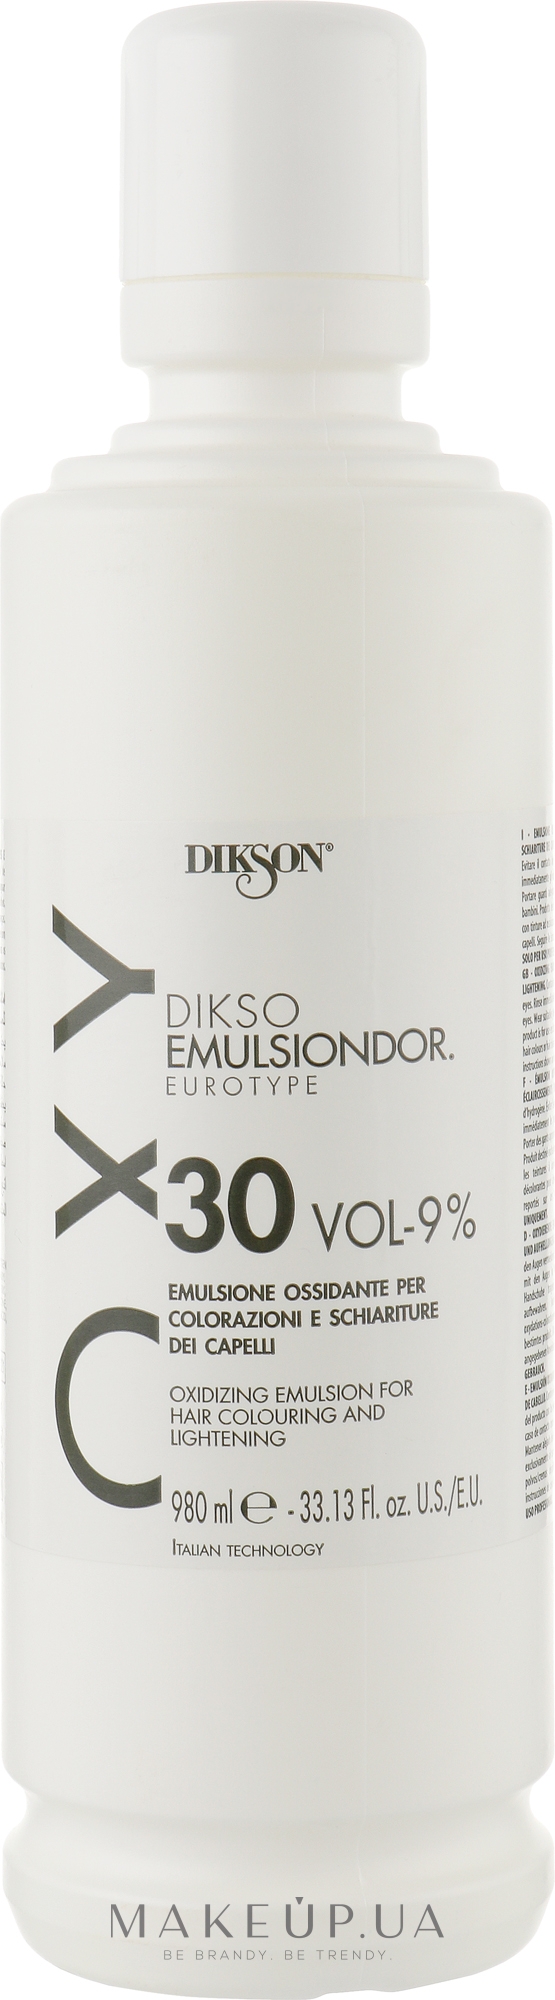 Окислювач для волосся - Dikson Oxy Oxidizing Emulsion For Hair Colouring And Lightening 30 Vol-9% — фото 980ml